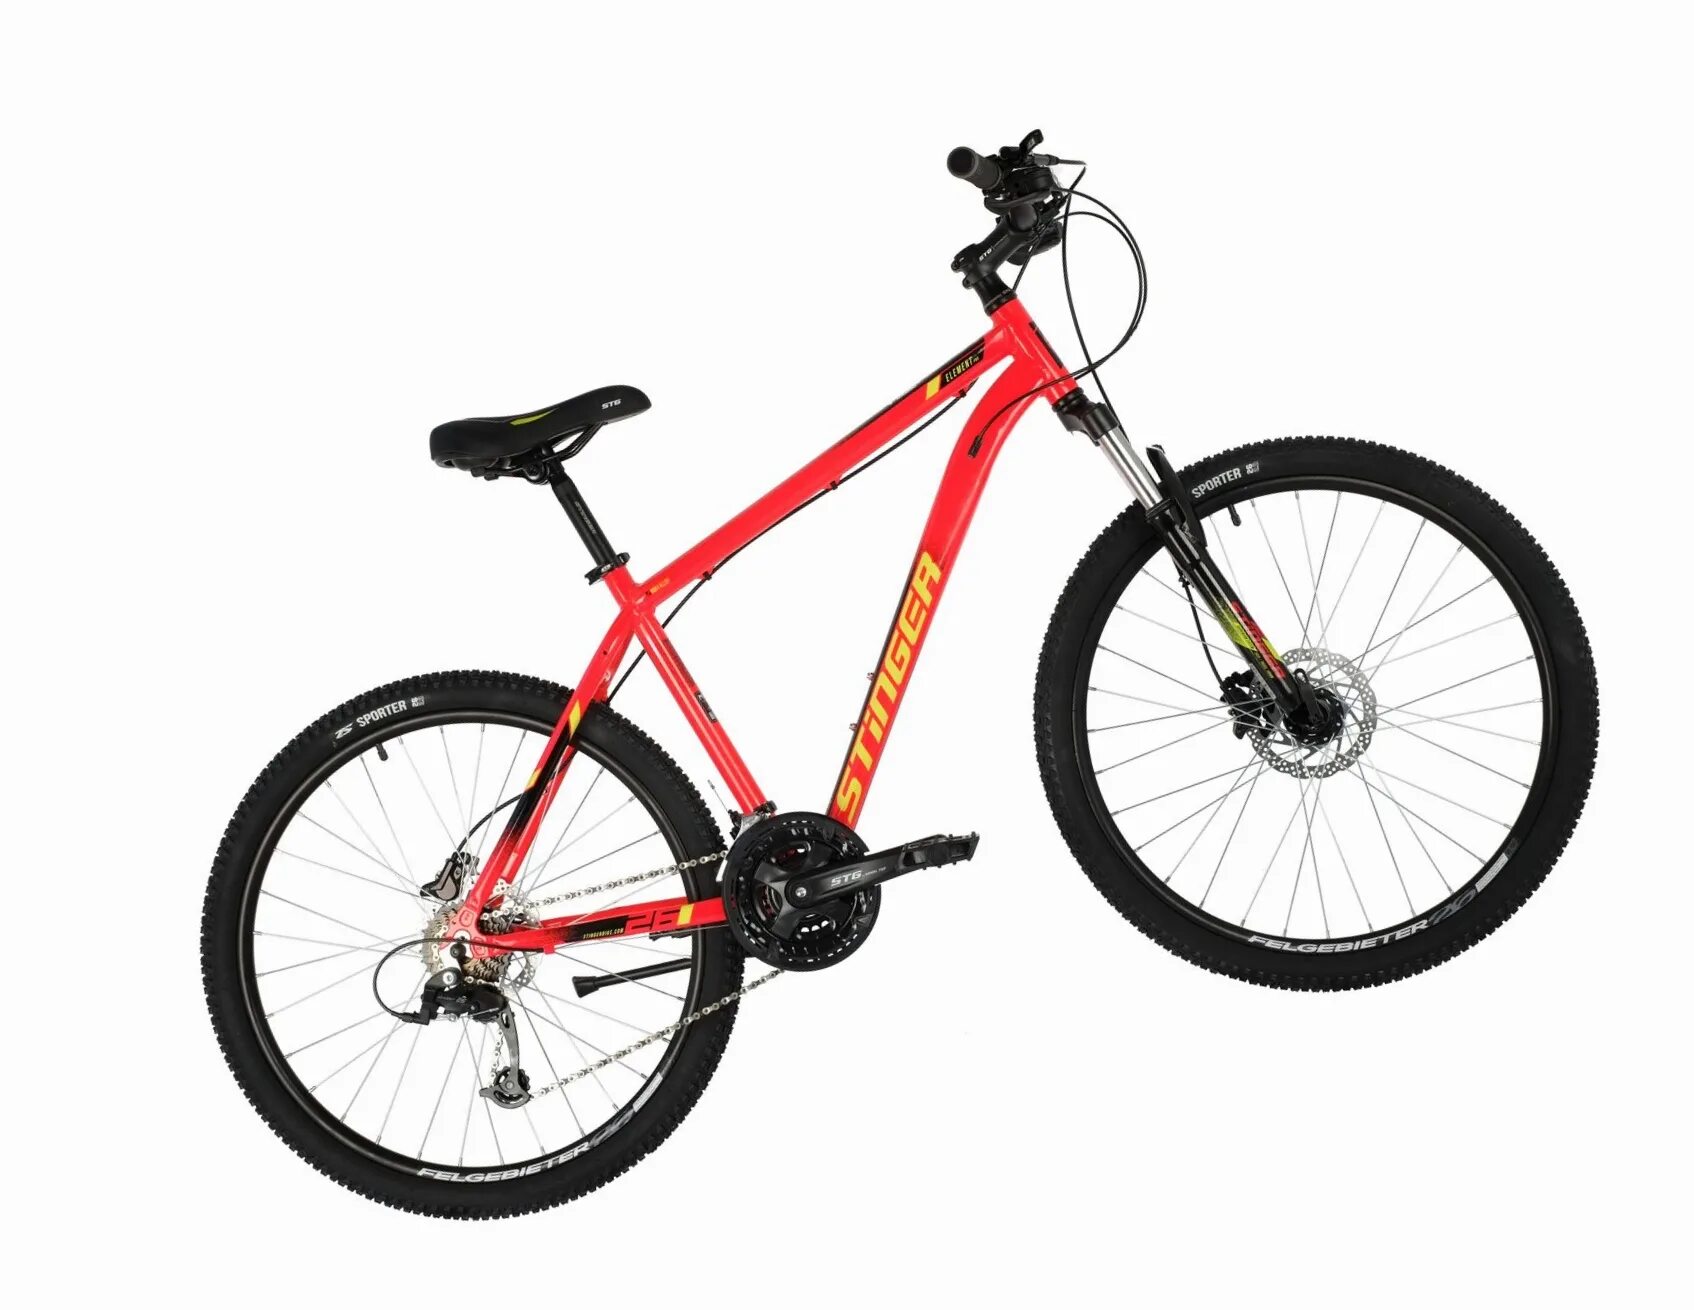 Element 26. Велосипед Стингер 26. Велосипед Stinger element Pro 26. Велосипед Stinger 26" element EVO оранжевый, алюминий, размер 18". Велосипед Stinger 26" element EVO se красный, алюминий, размер 14".